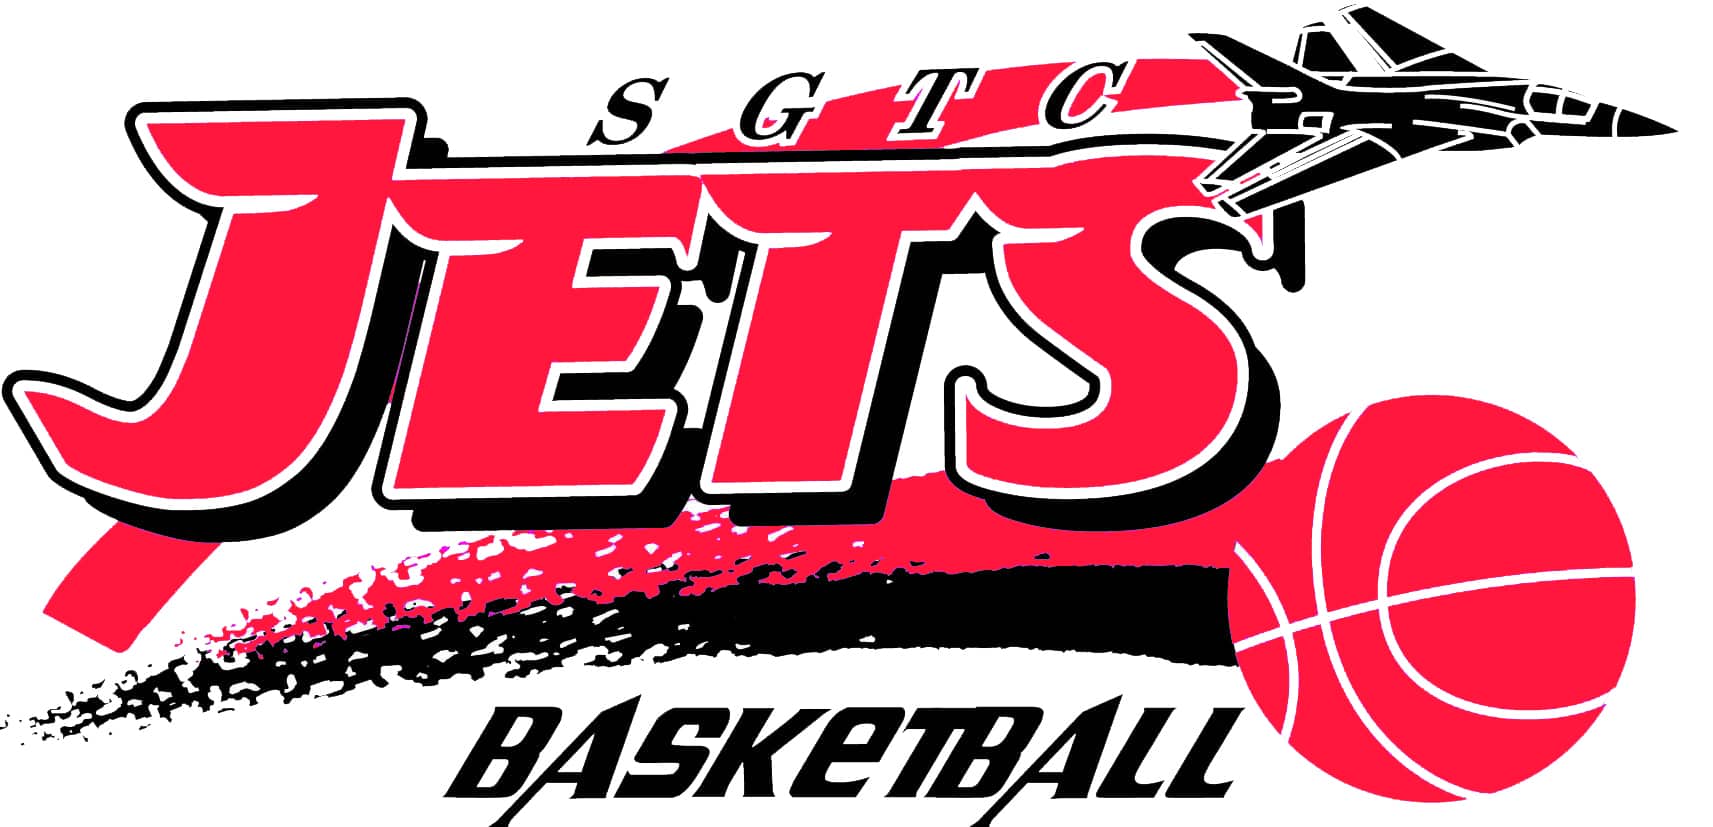 Jets basketball logo